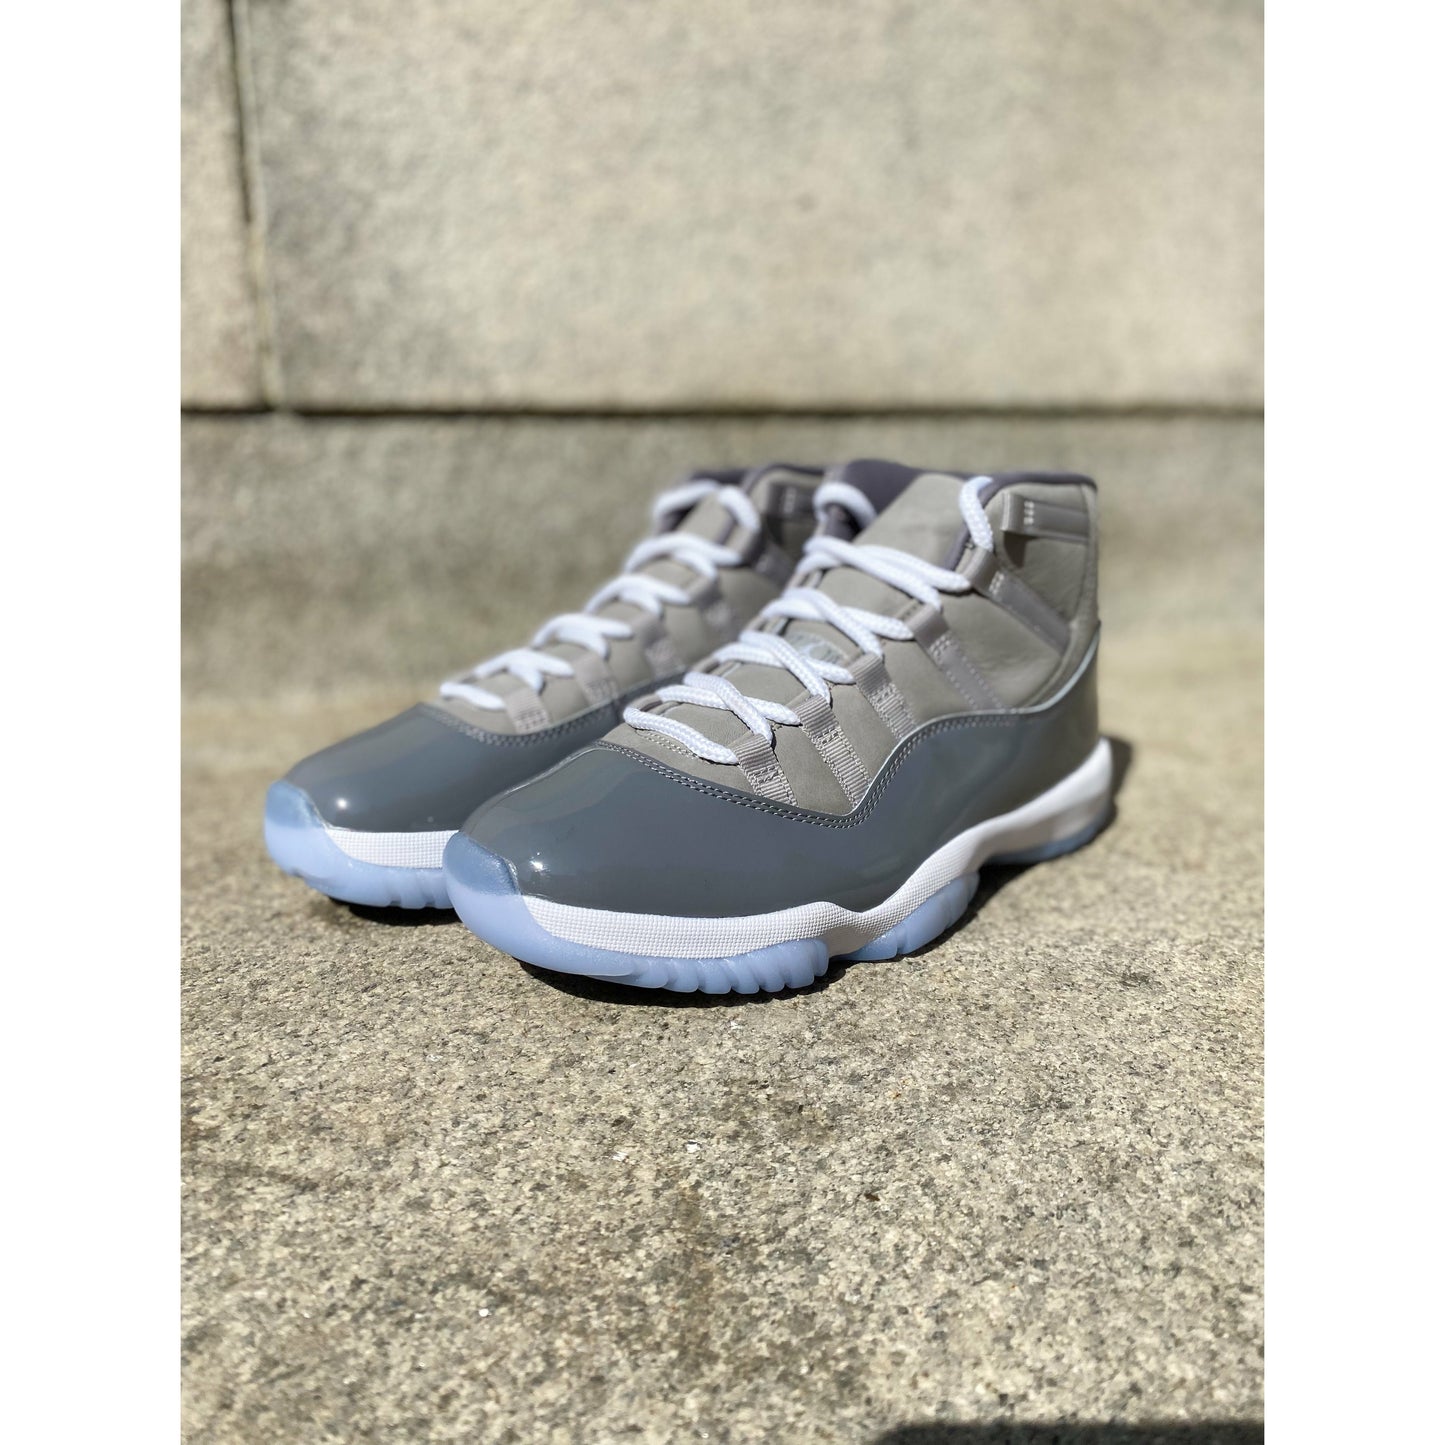 Jordan 11 Retro Cool Grey (2021) from Jordan's